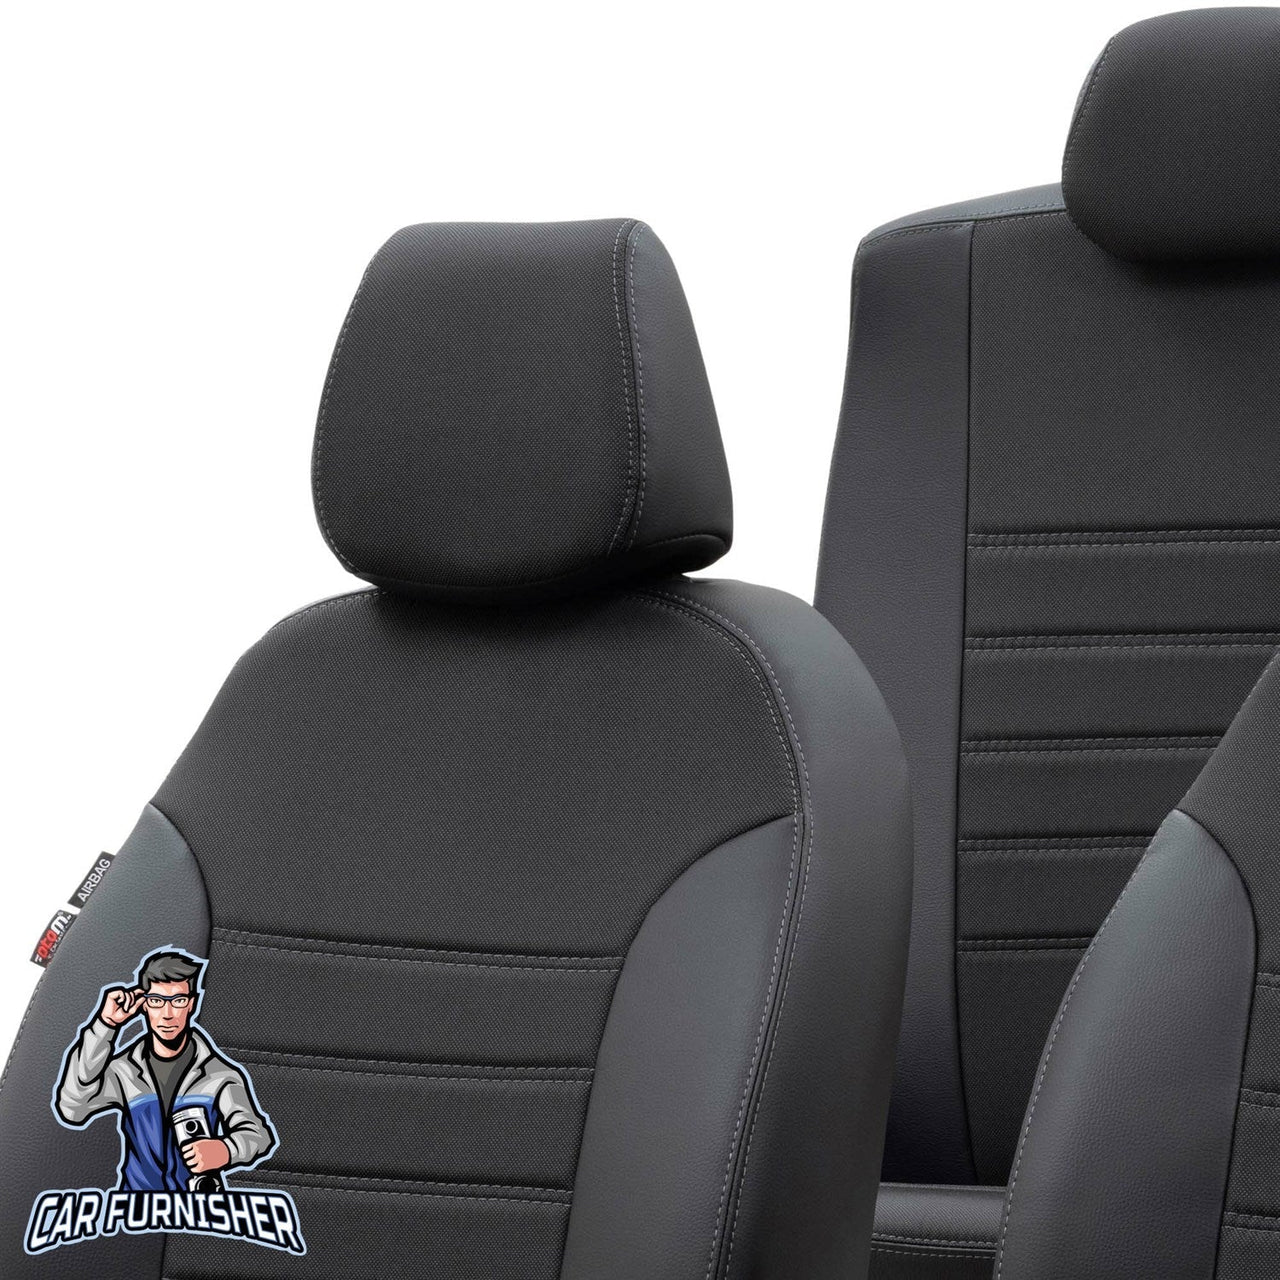 Toyota Land Cruiser Seat Cover Paris Leather & Jacquard Design Beige Leather & Jacquard Fabric